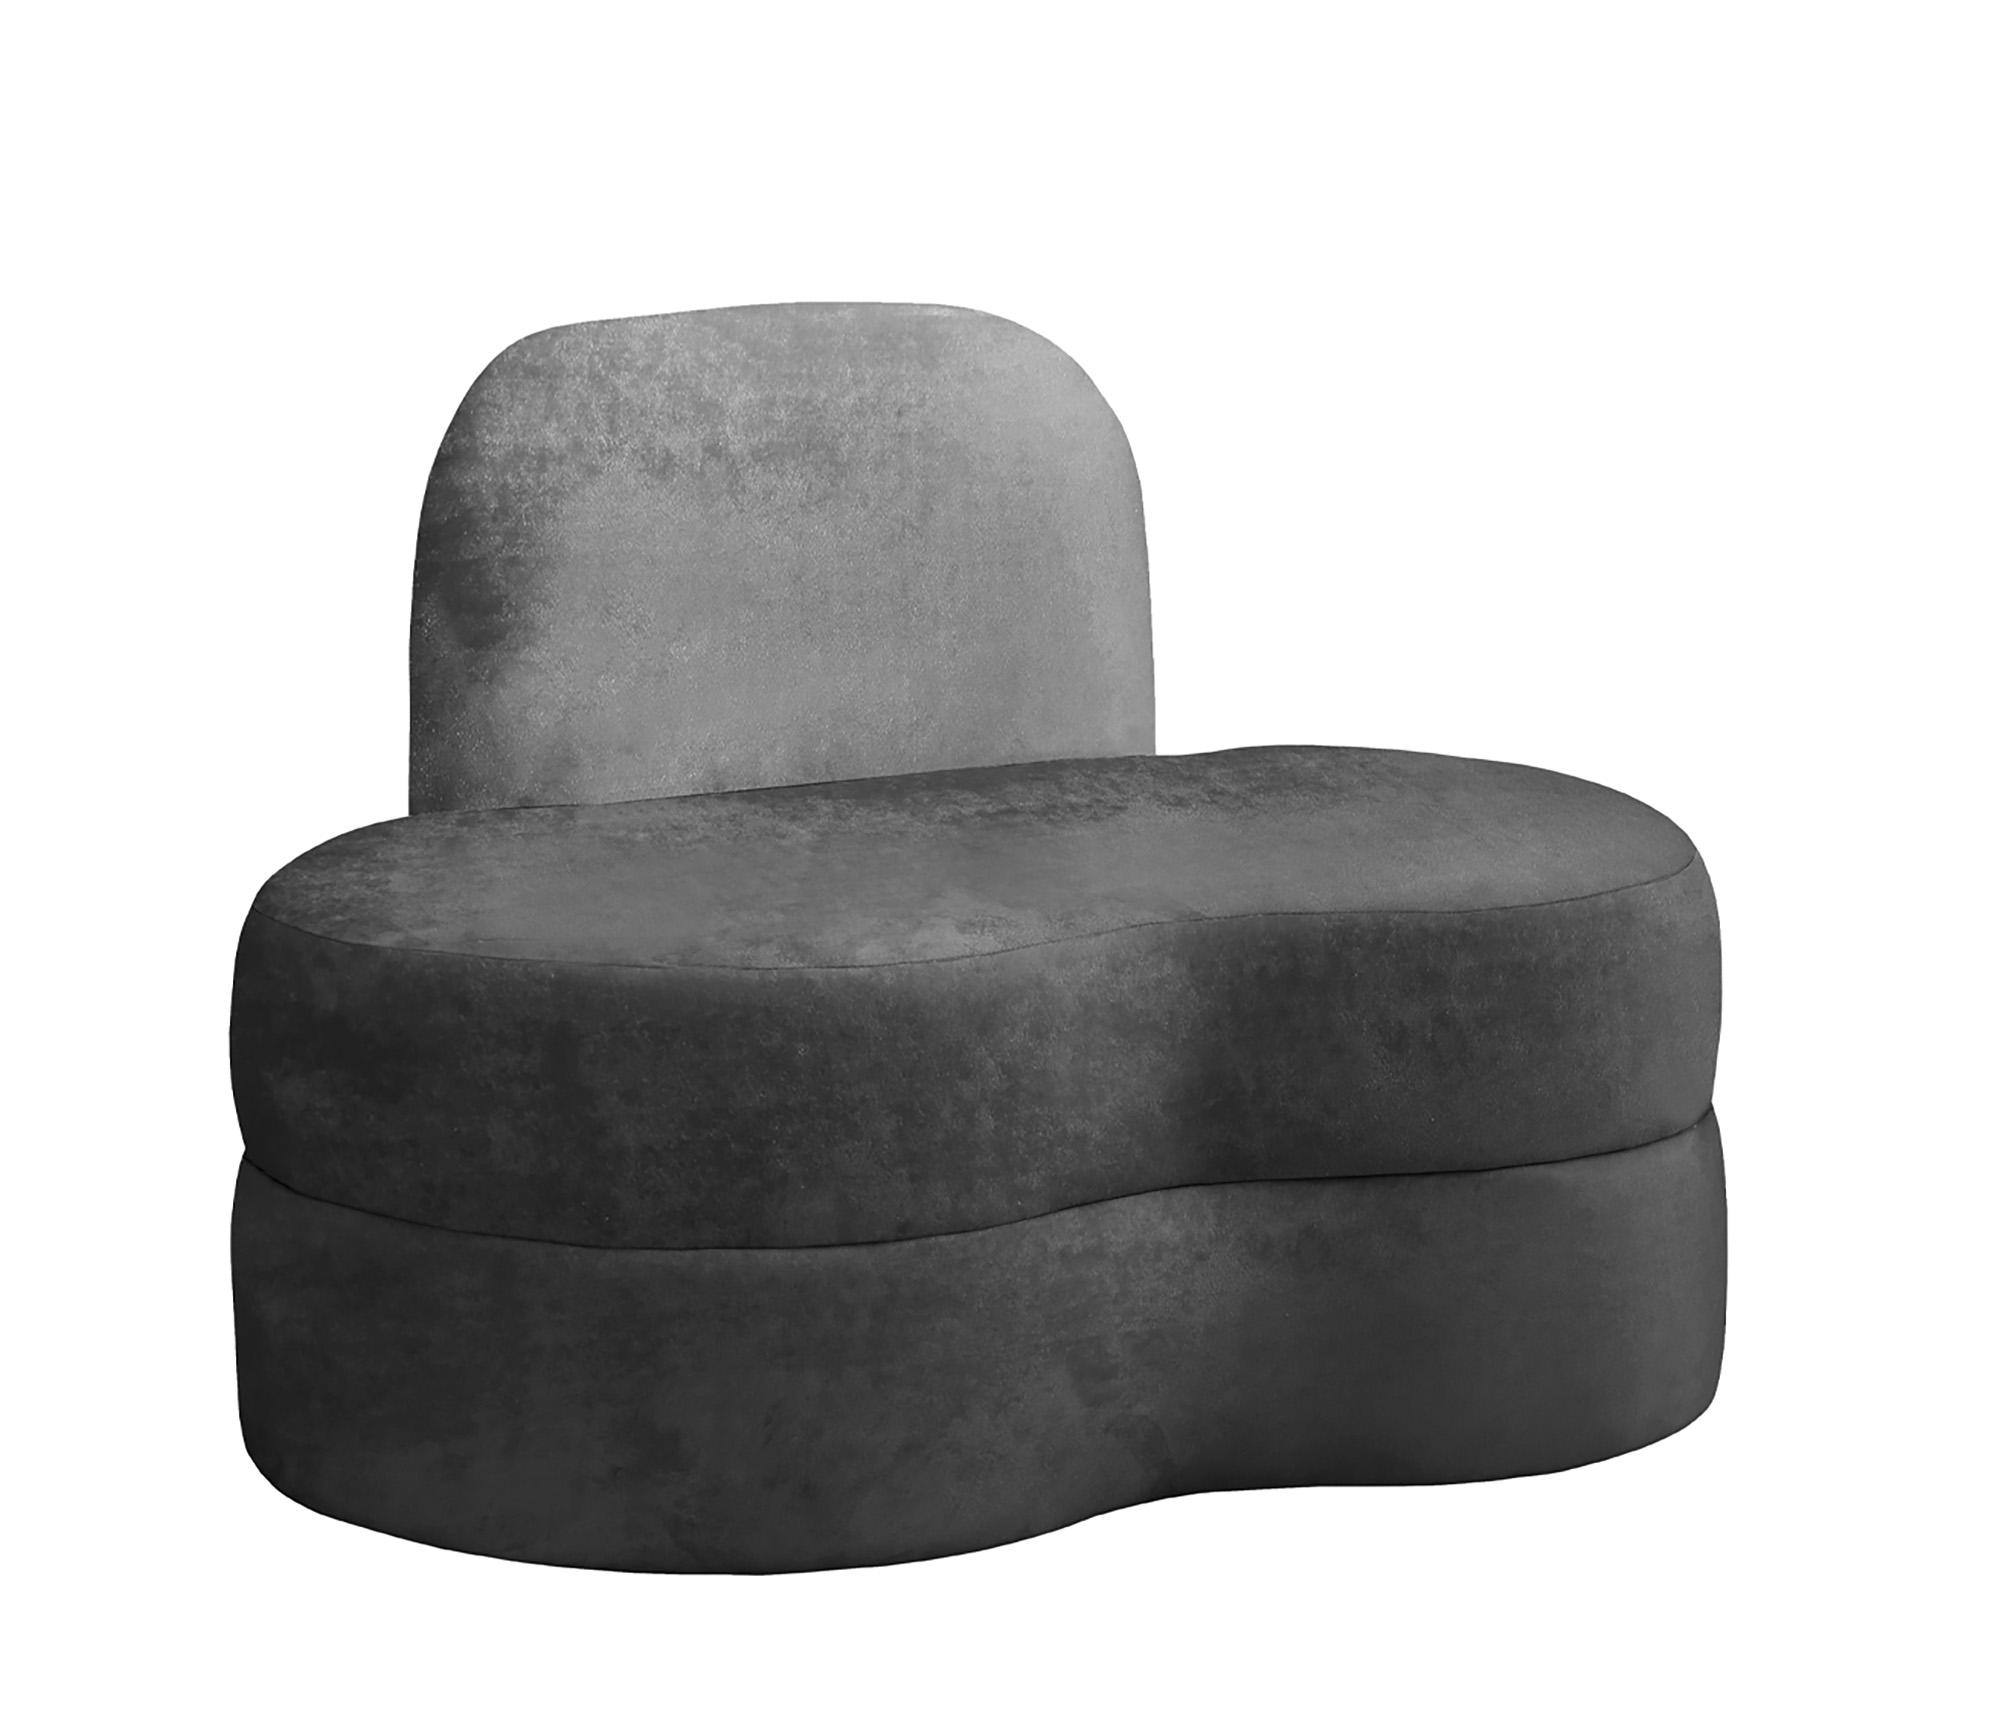 Contemporary Accent Chair MITZY 606Grey-C 606Grey-C in Gray Velvet